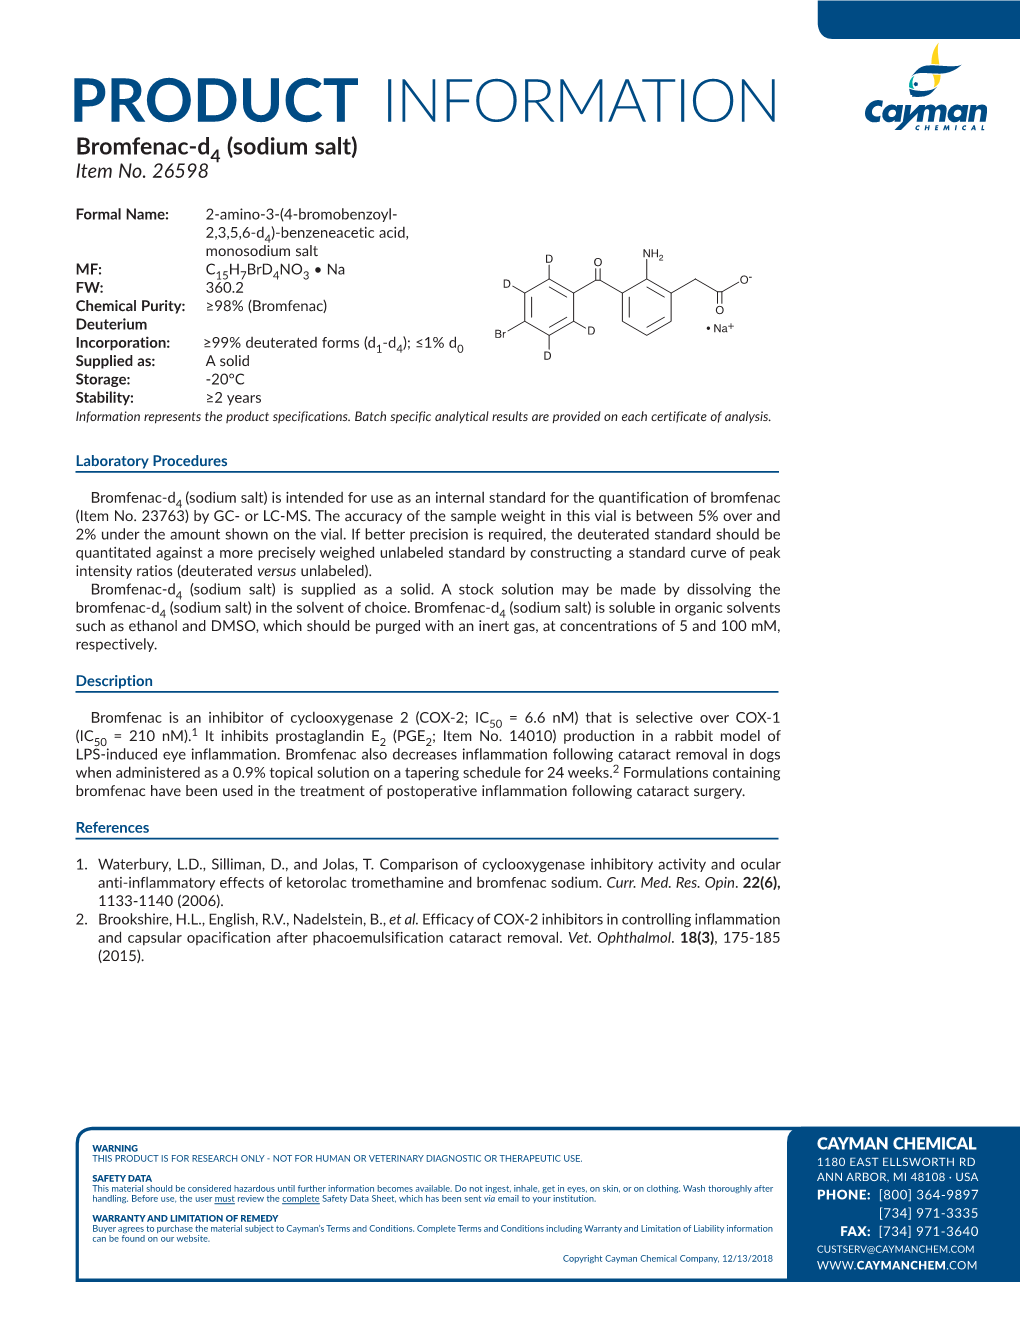 PRODUCT INFORMATION Bromfenac-D4 (Sodium Salt) Item No